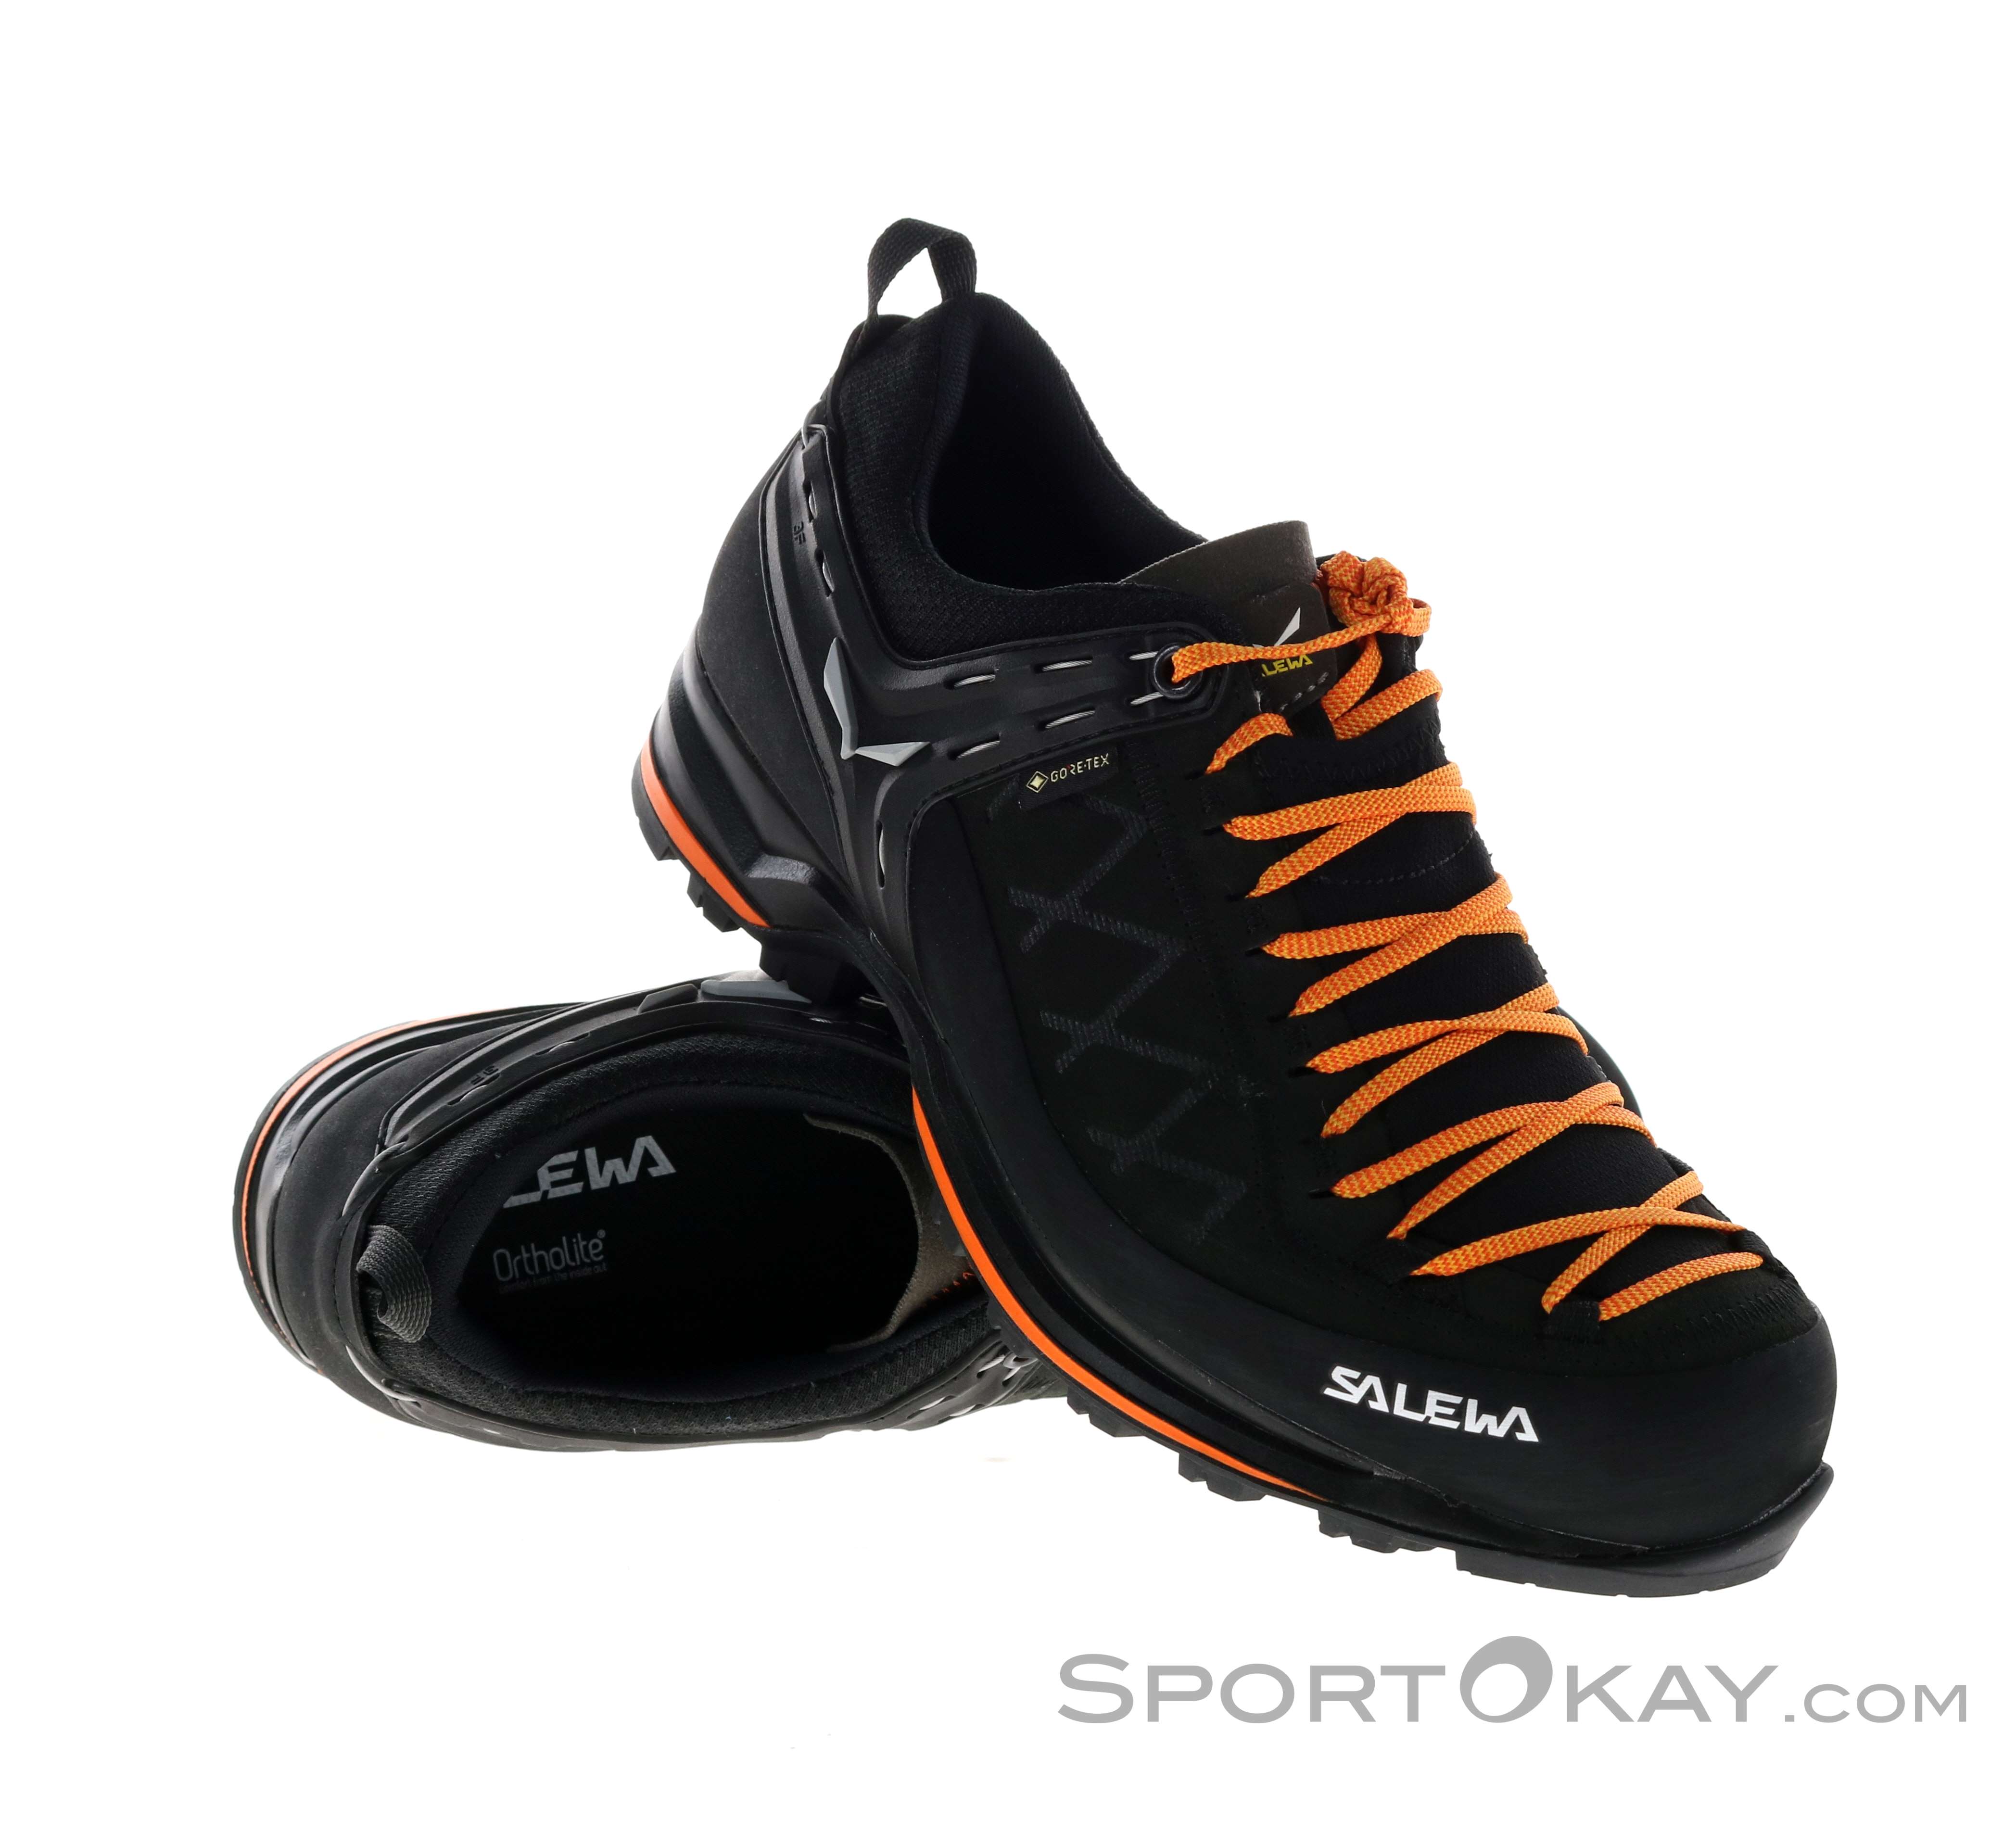  Salewa Men's Trekking & Hiking Boots, Black Out Carrot, 7